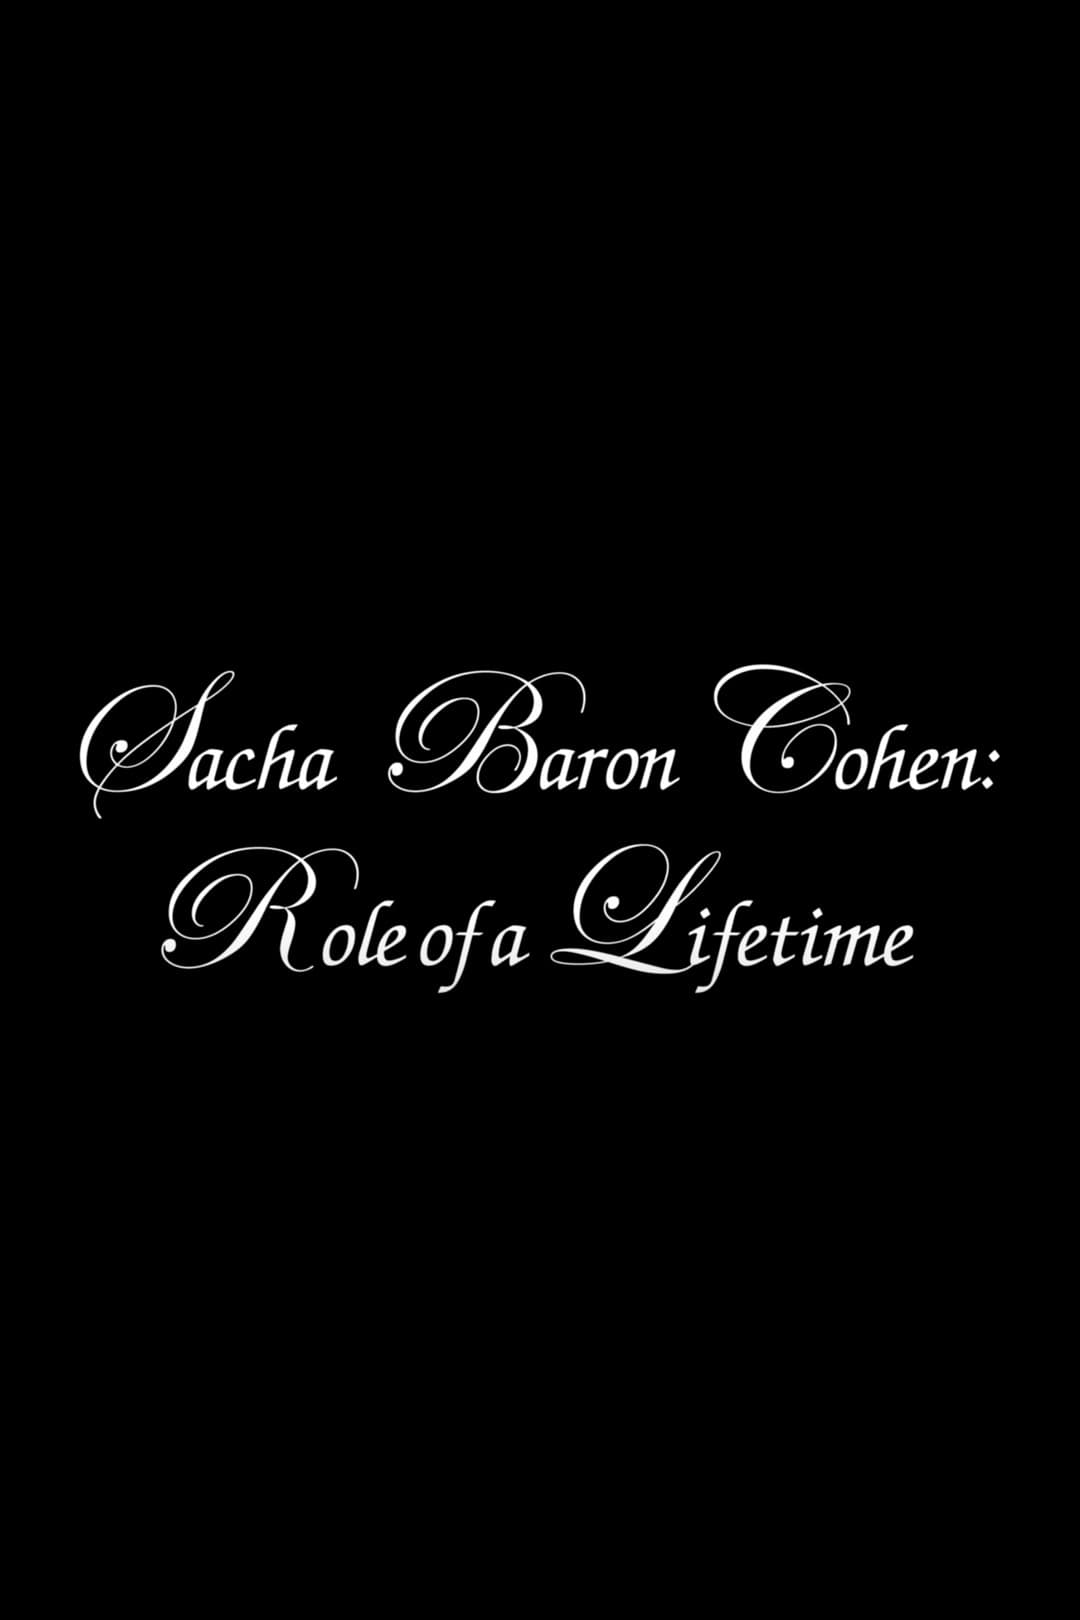 Sacha Baron Cohen: Role of a Lifetime